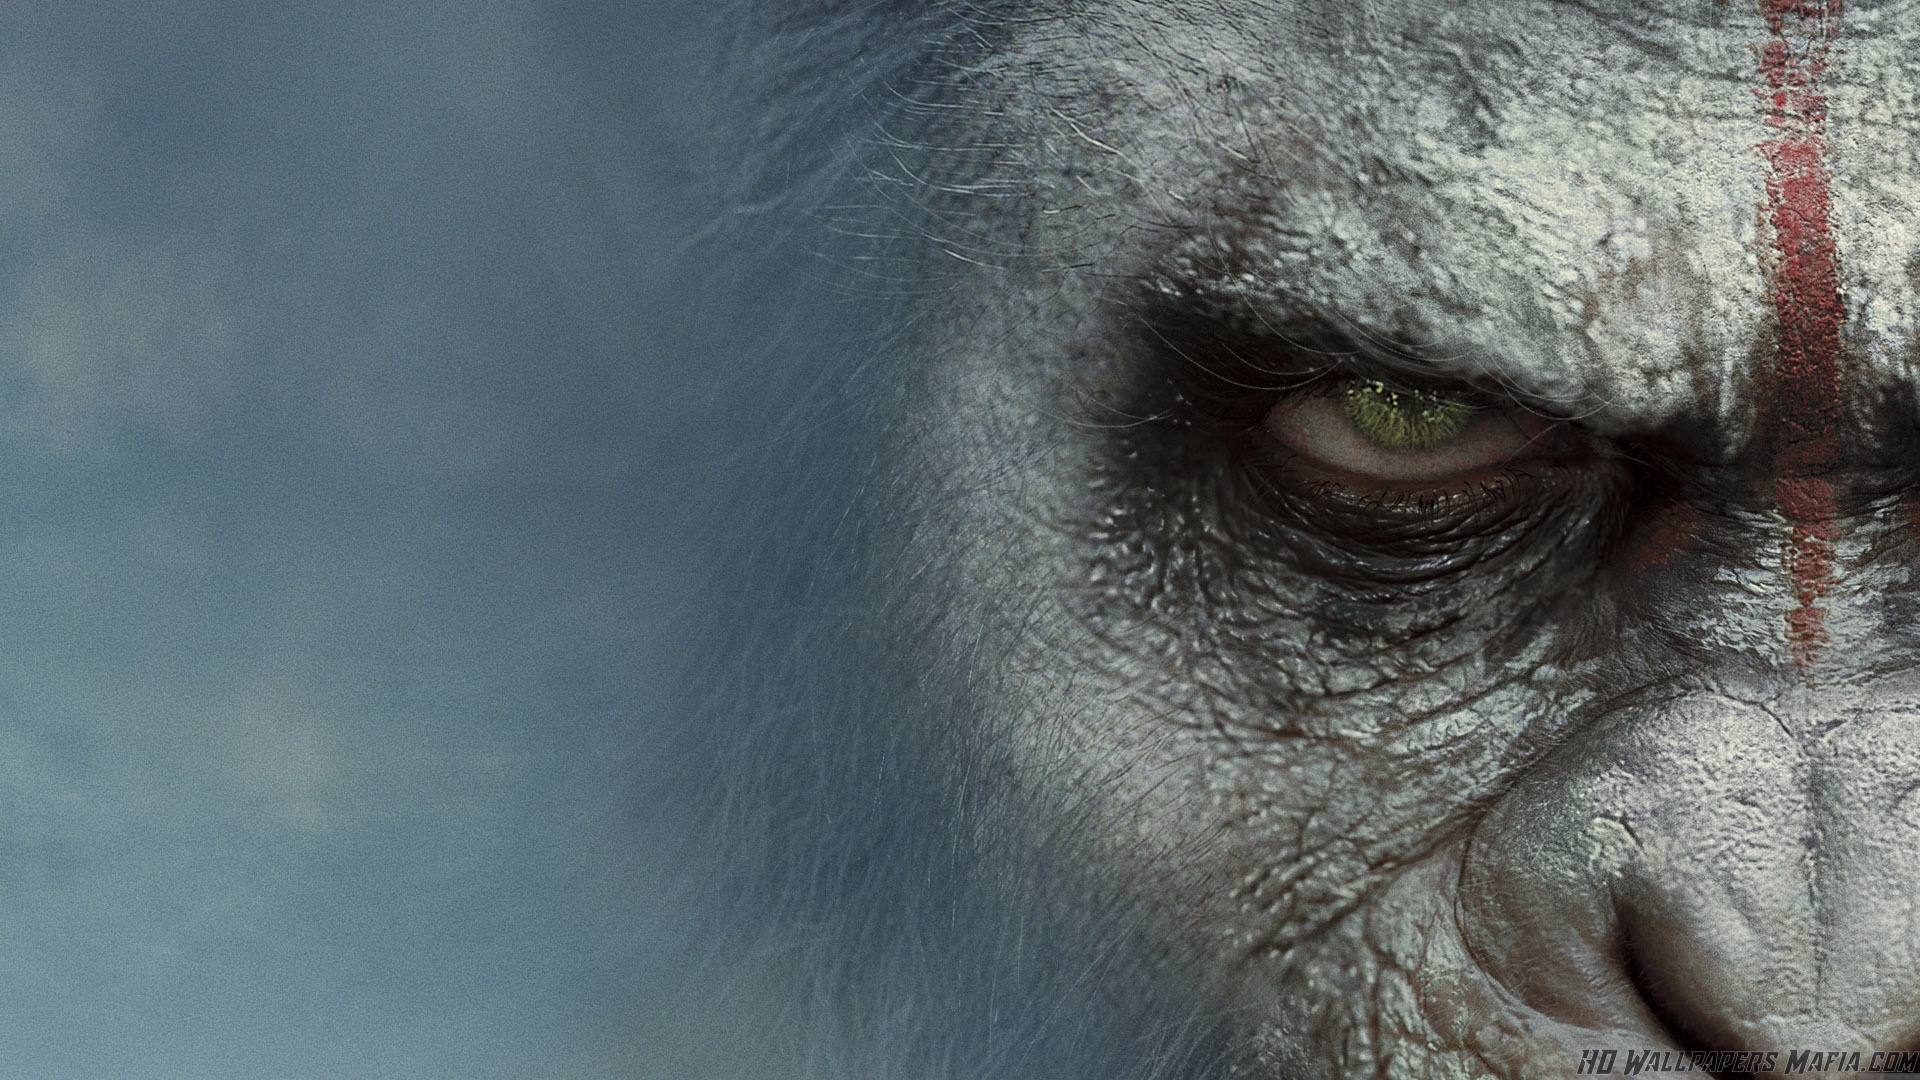 Planet Of The Apes Terbaru - HD Wallpaper 